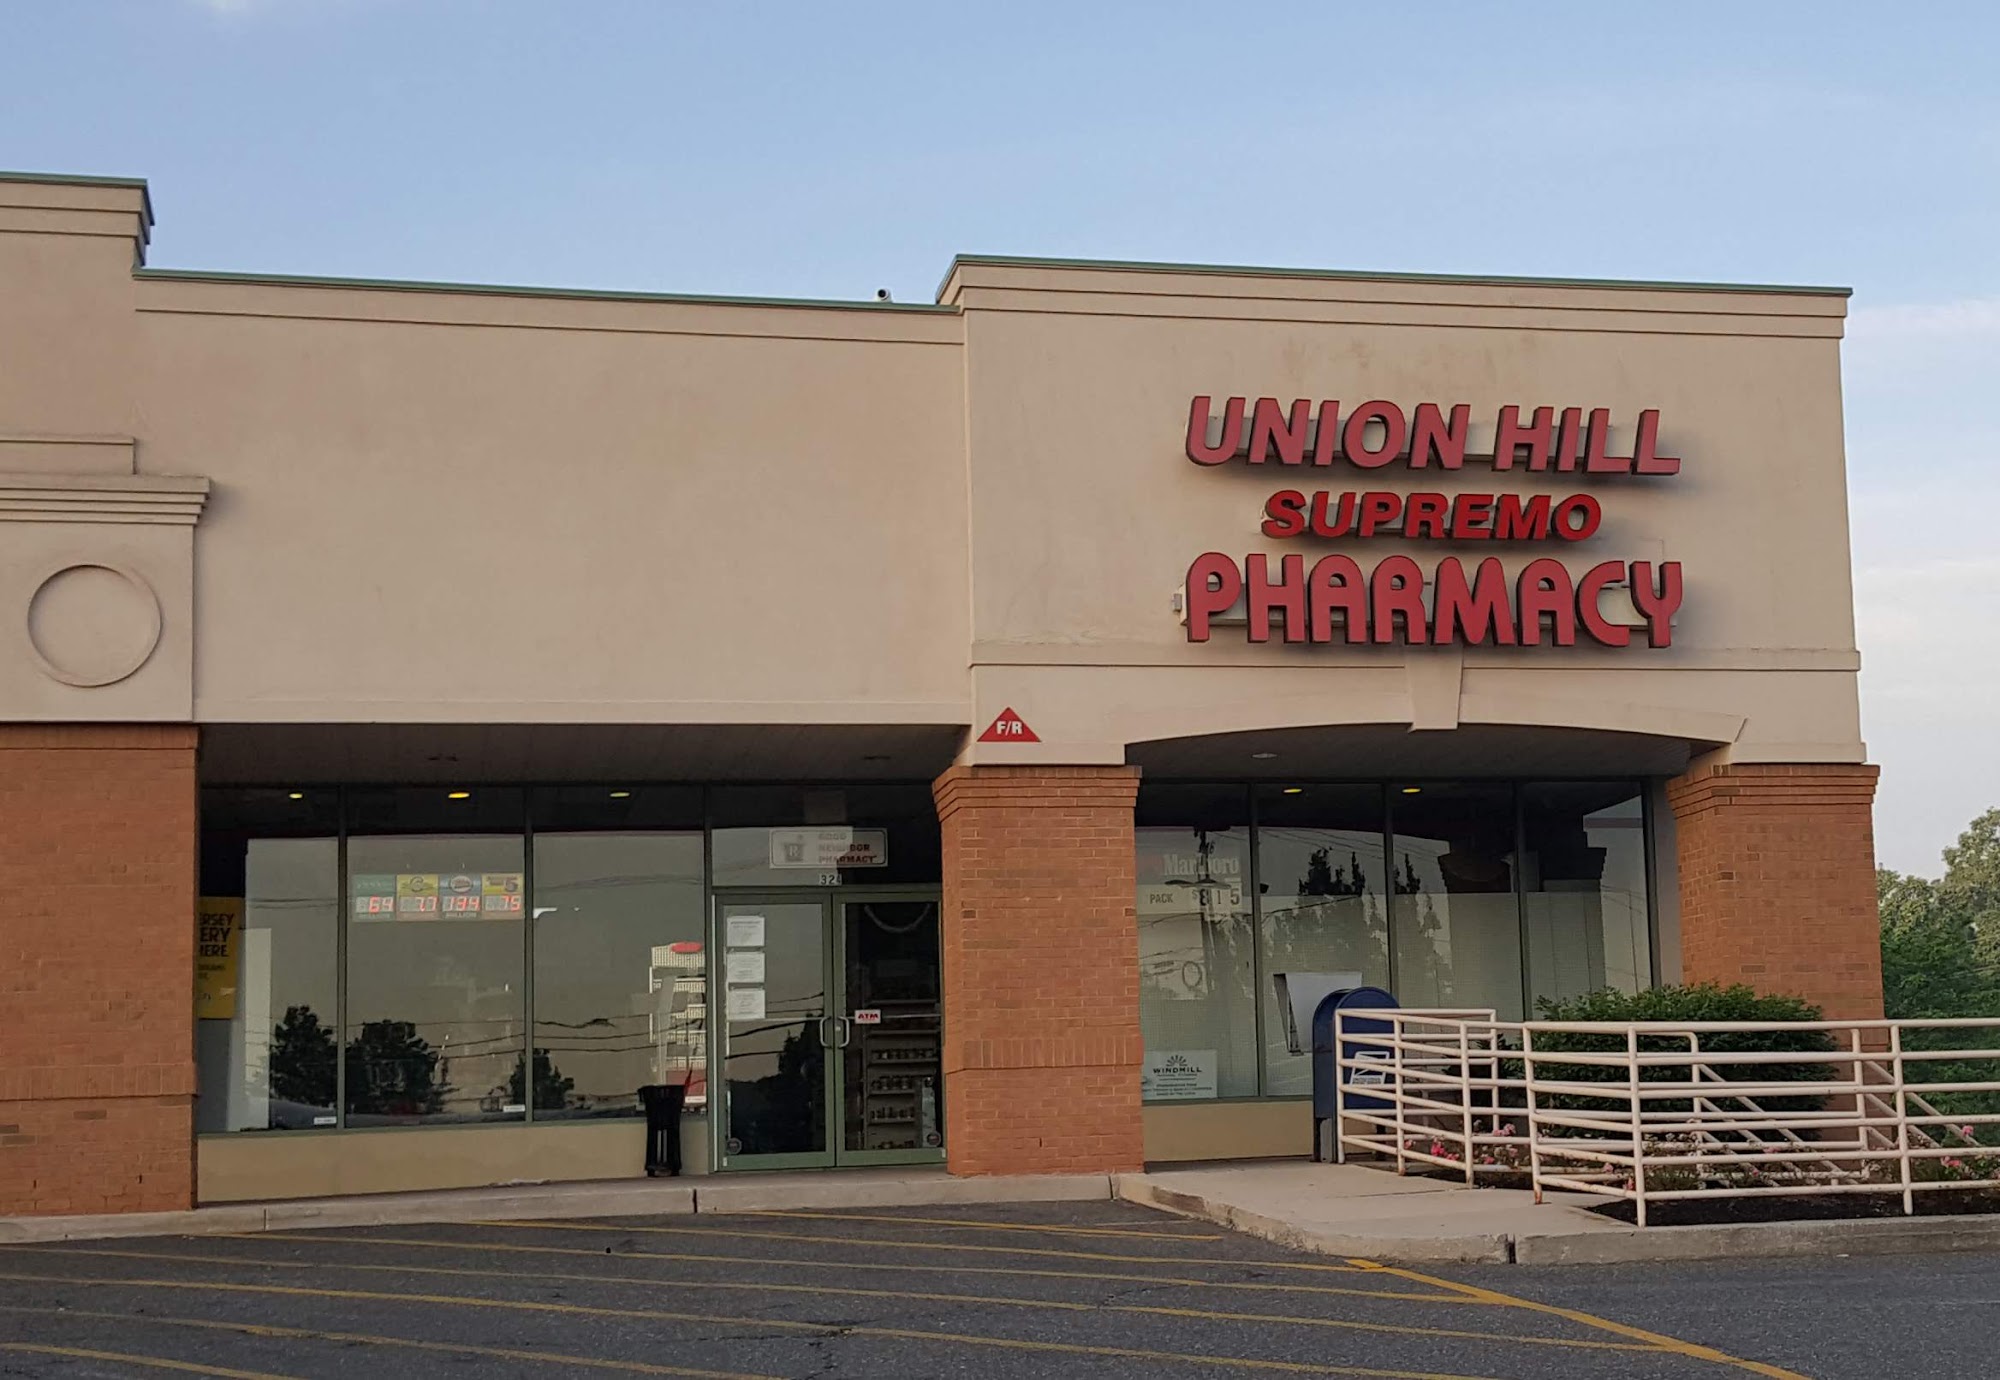 Union Hill Supremo Pharmacy